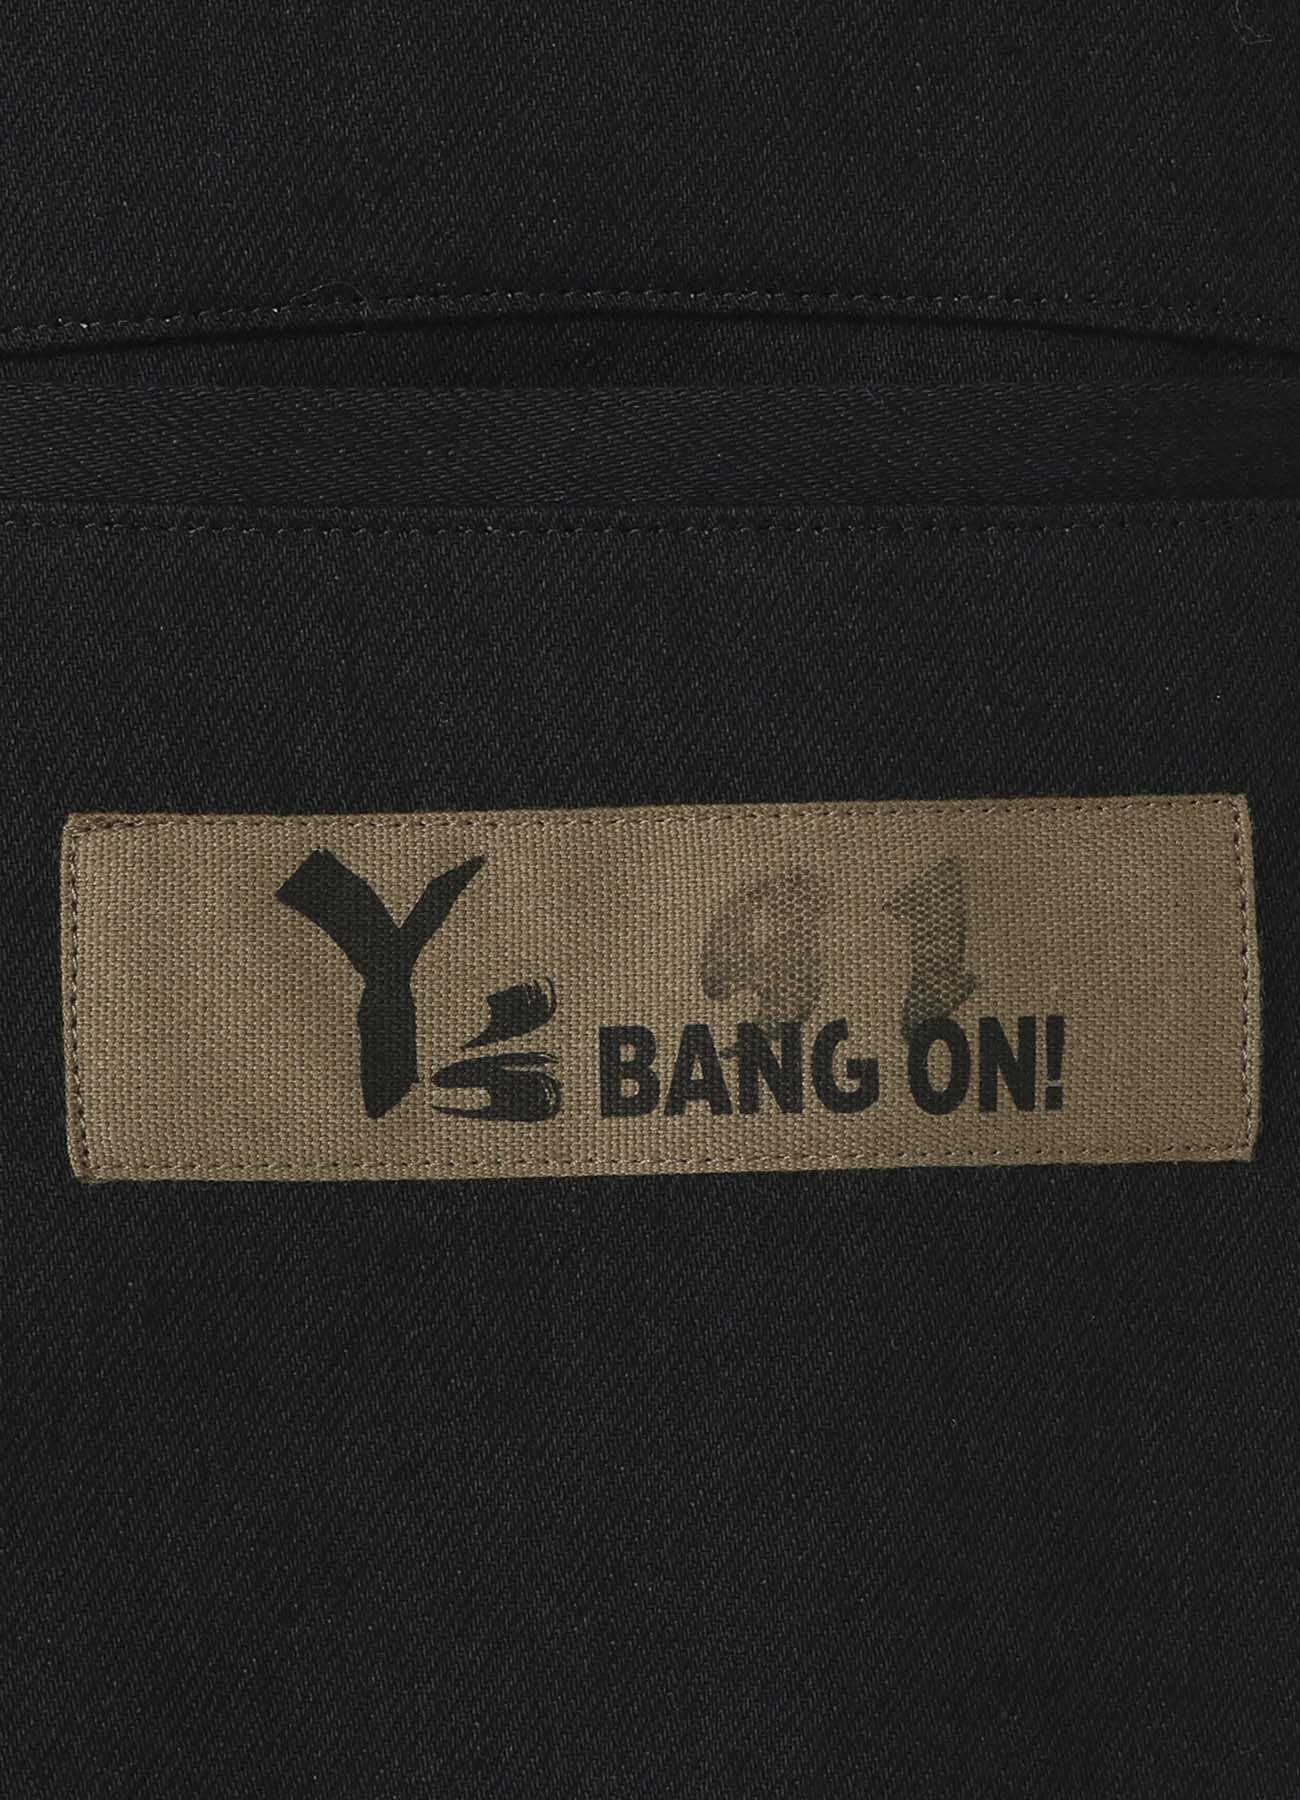 Y's BANG ON!No.91 Military Long-Coat Black denim